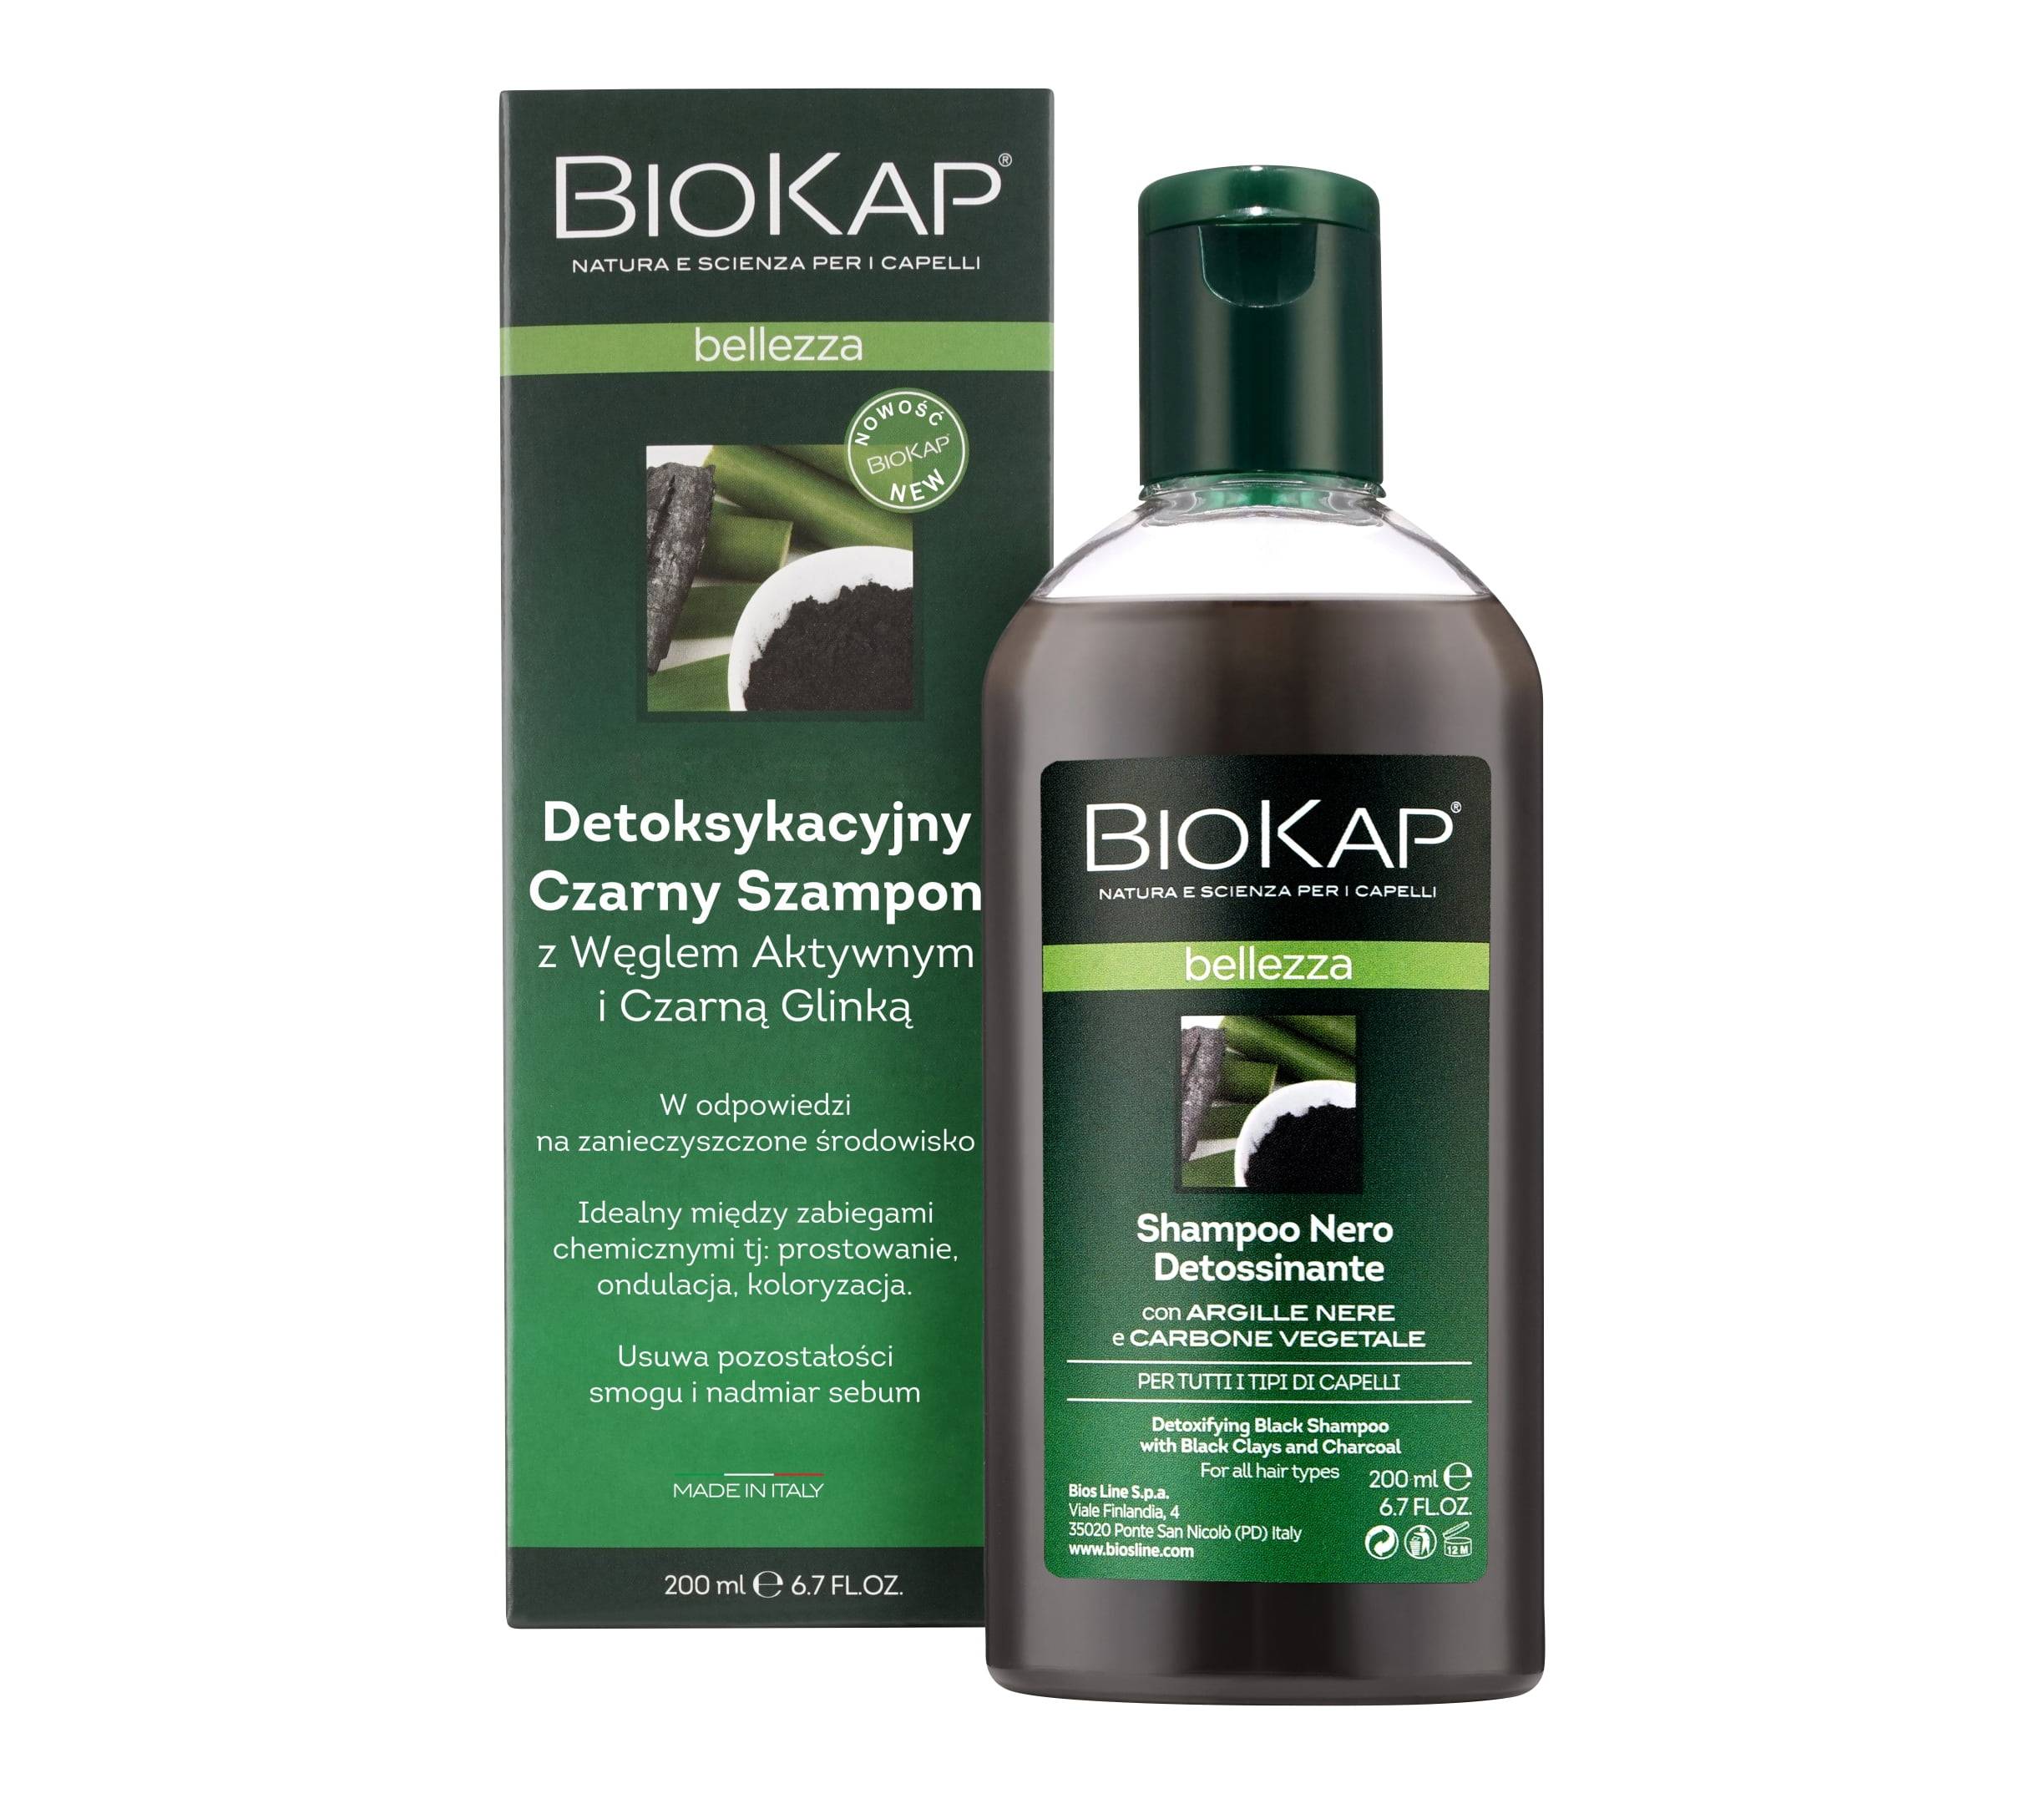 biokap szampon odbudowujacy 200 ml nutricolor